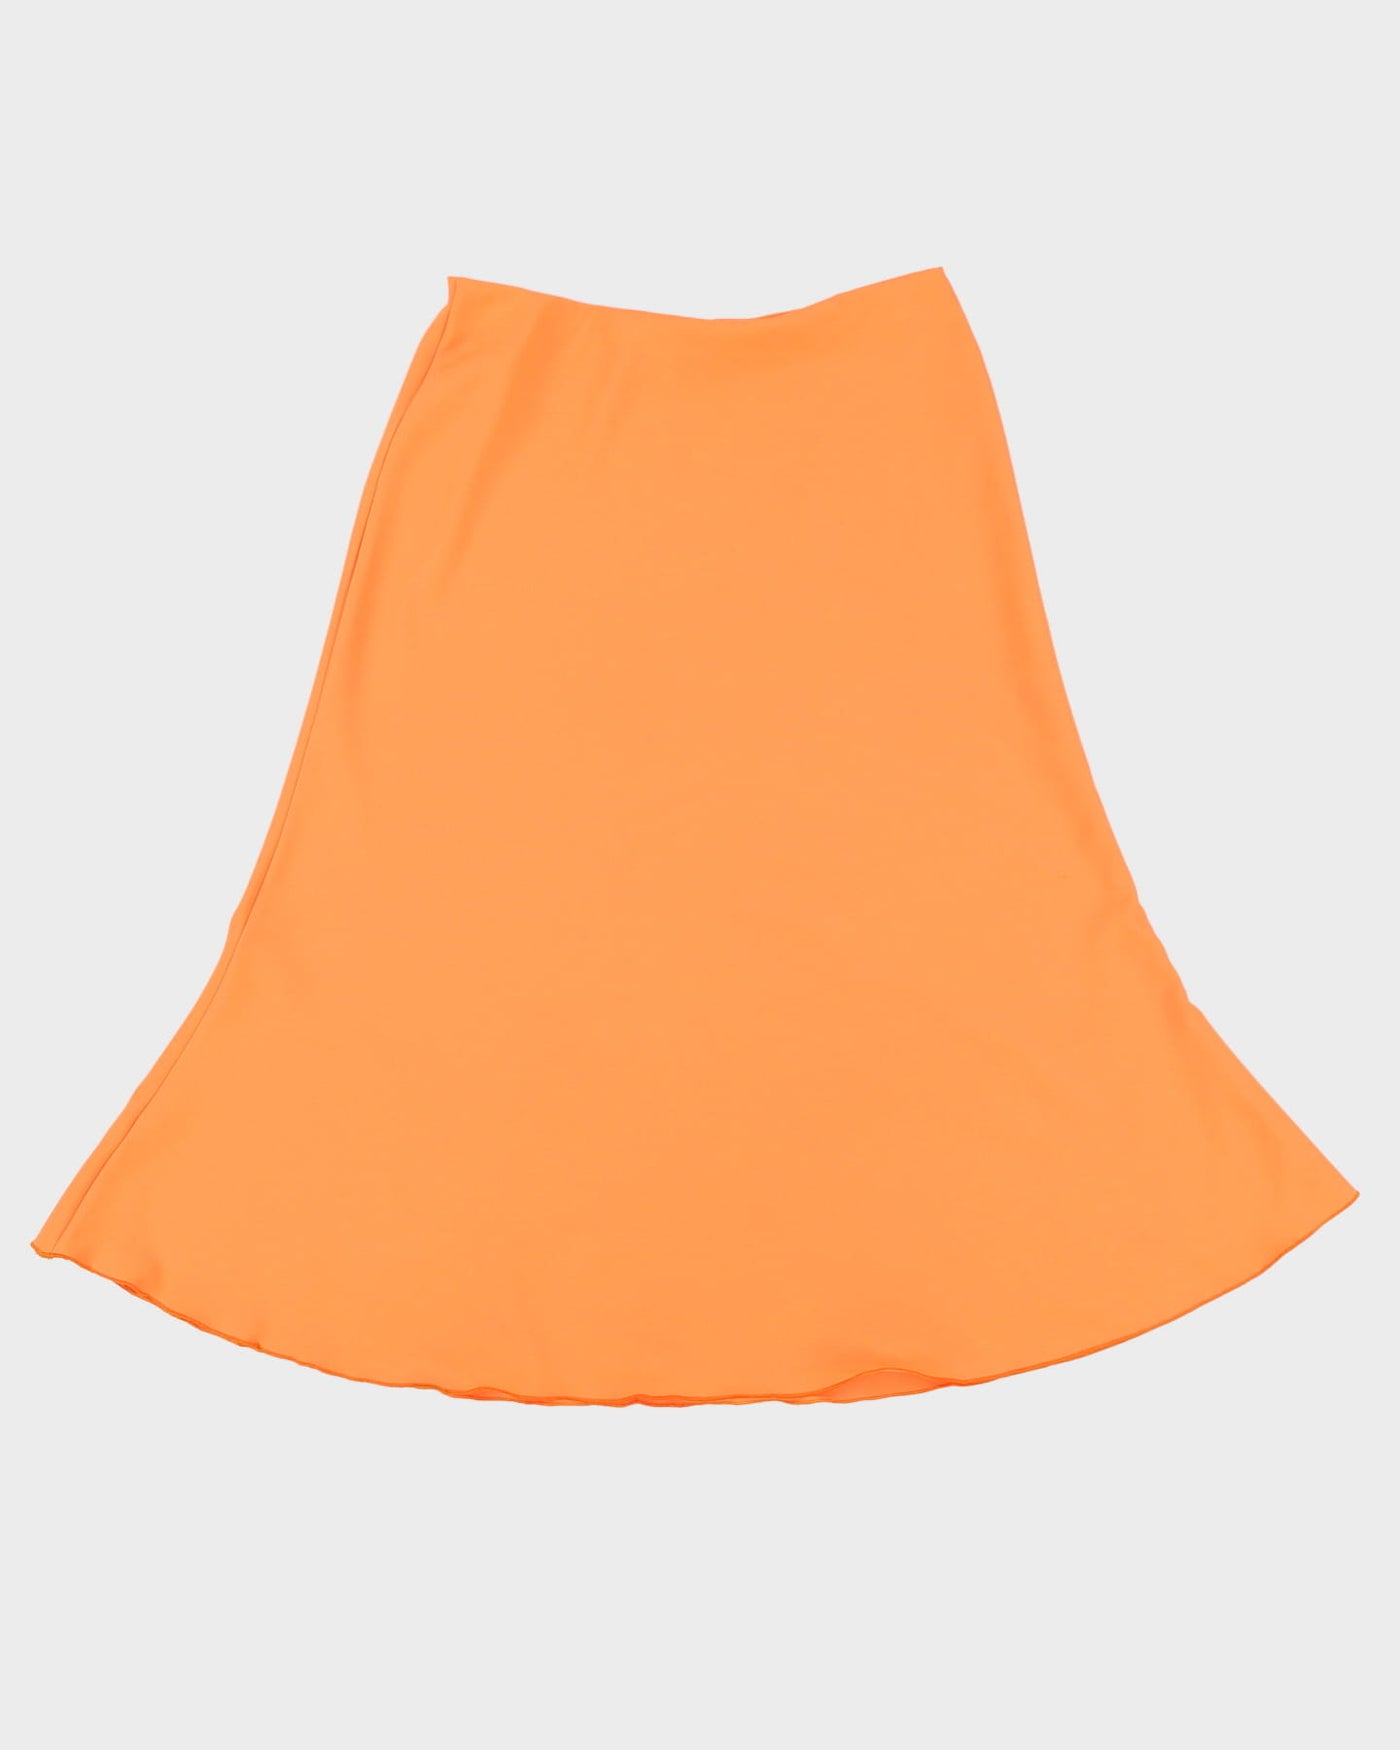 Rokit Originals Faery Orange Skirt - XL